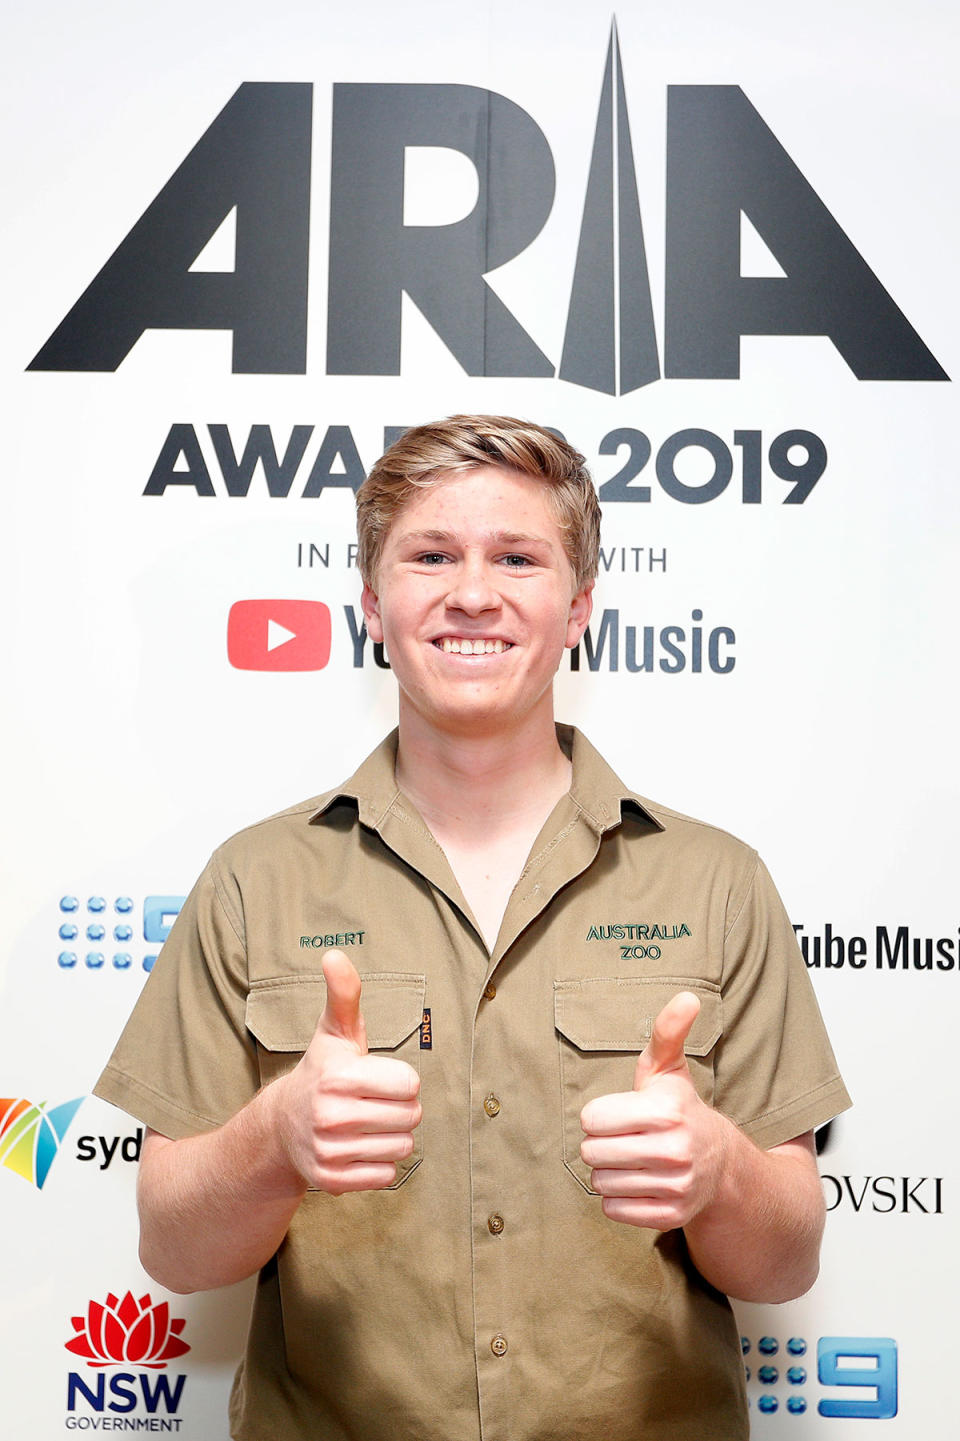 Robert Irwin posing on the ARA Awards 2019 red carpet